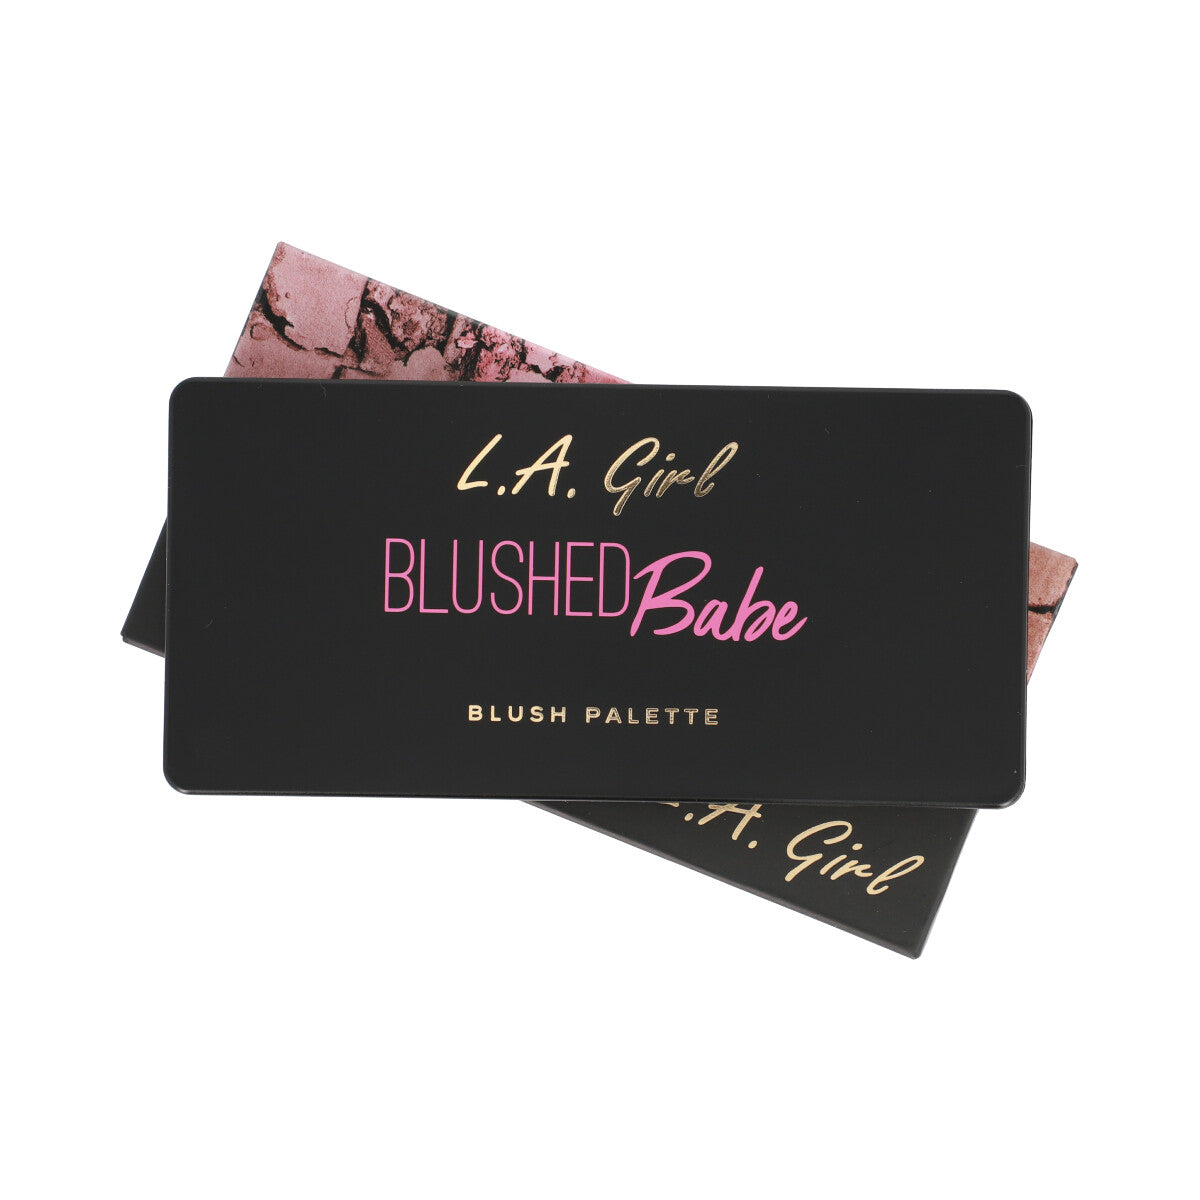 Blush Palette Blushed Babe